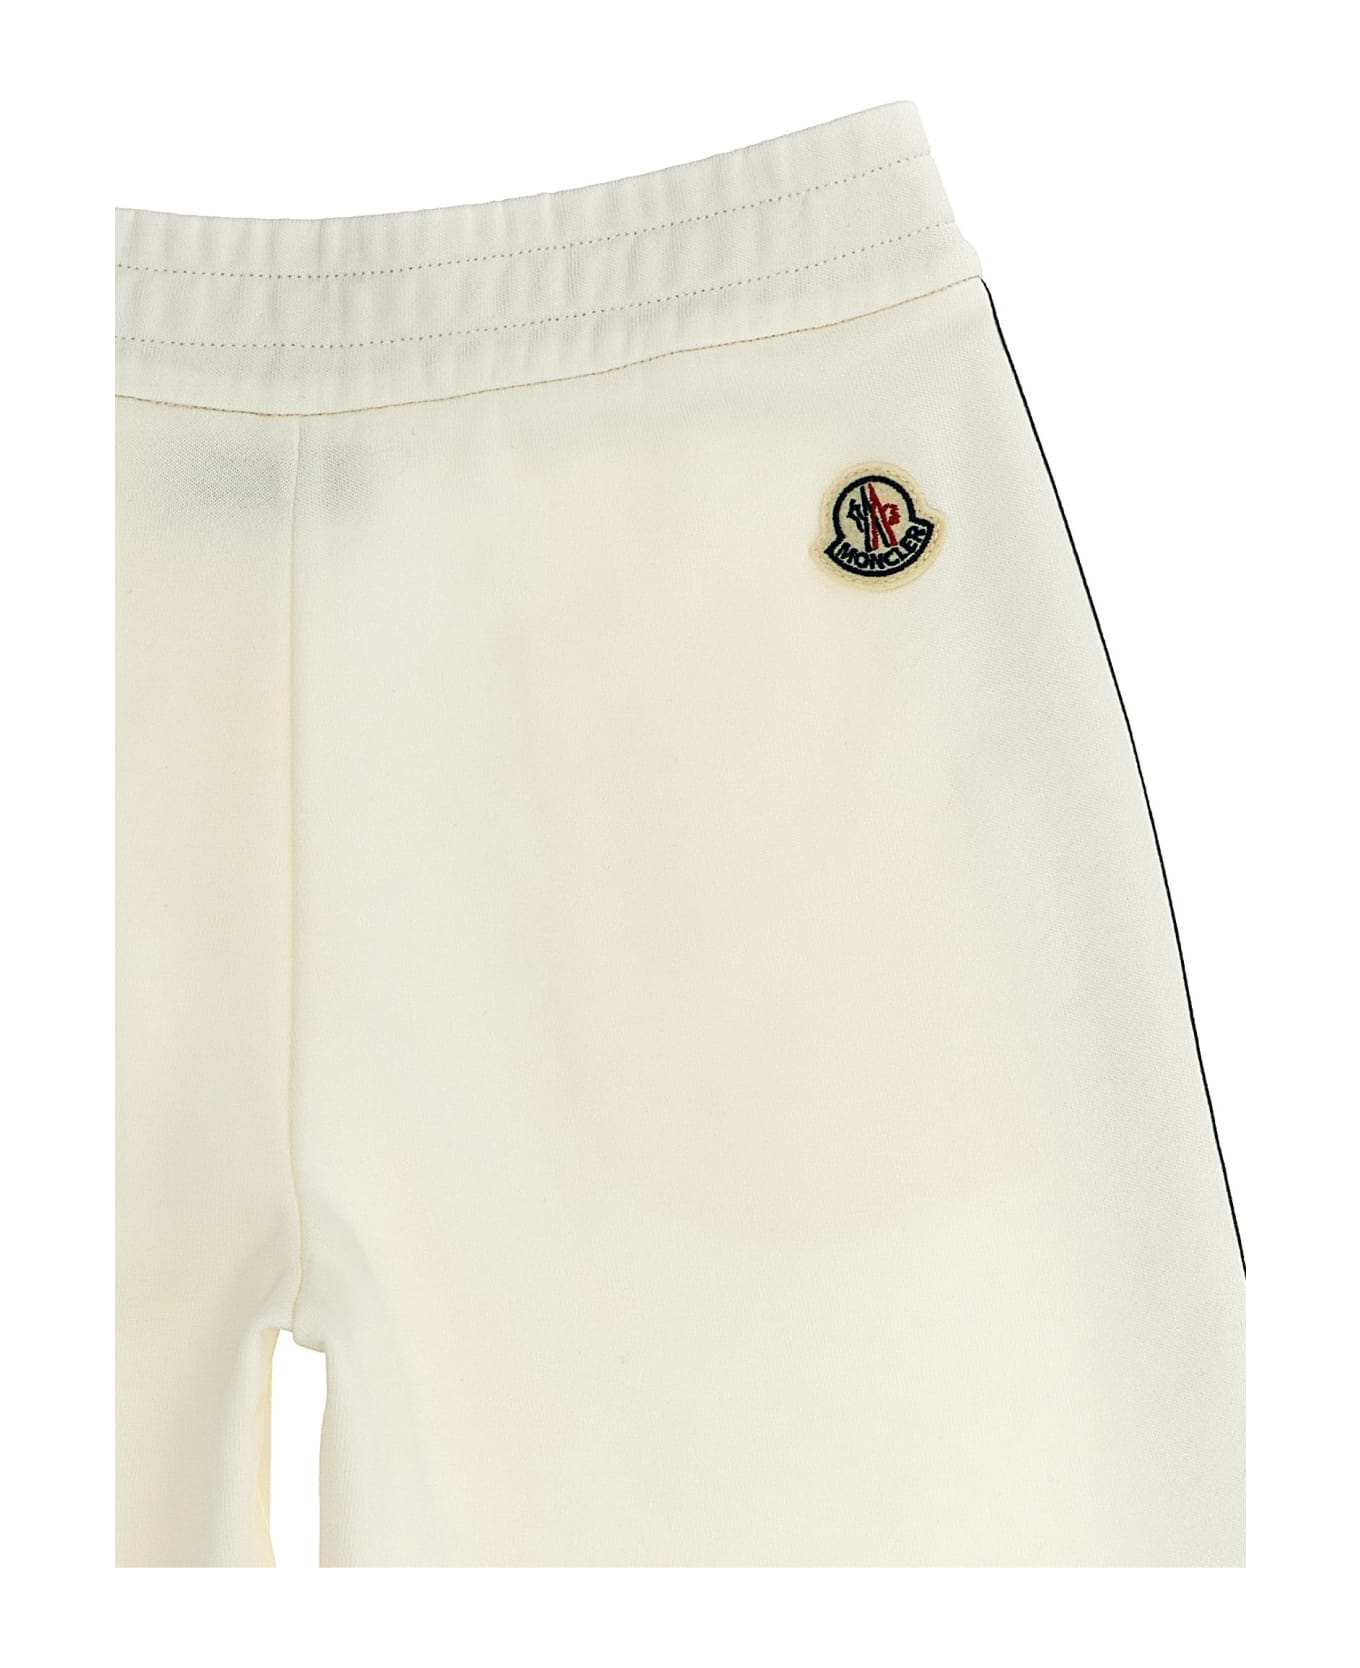 Moncler Grosgrain Band Bermuda Shorts - White